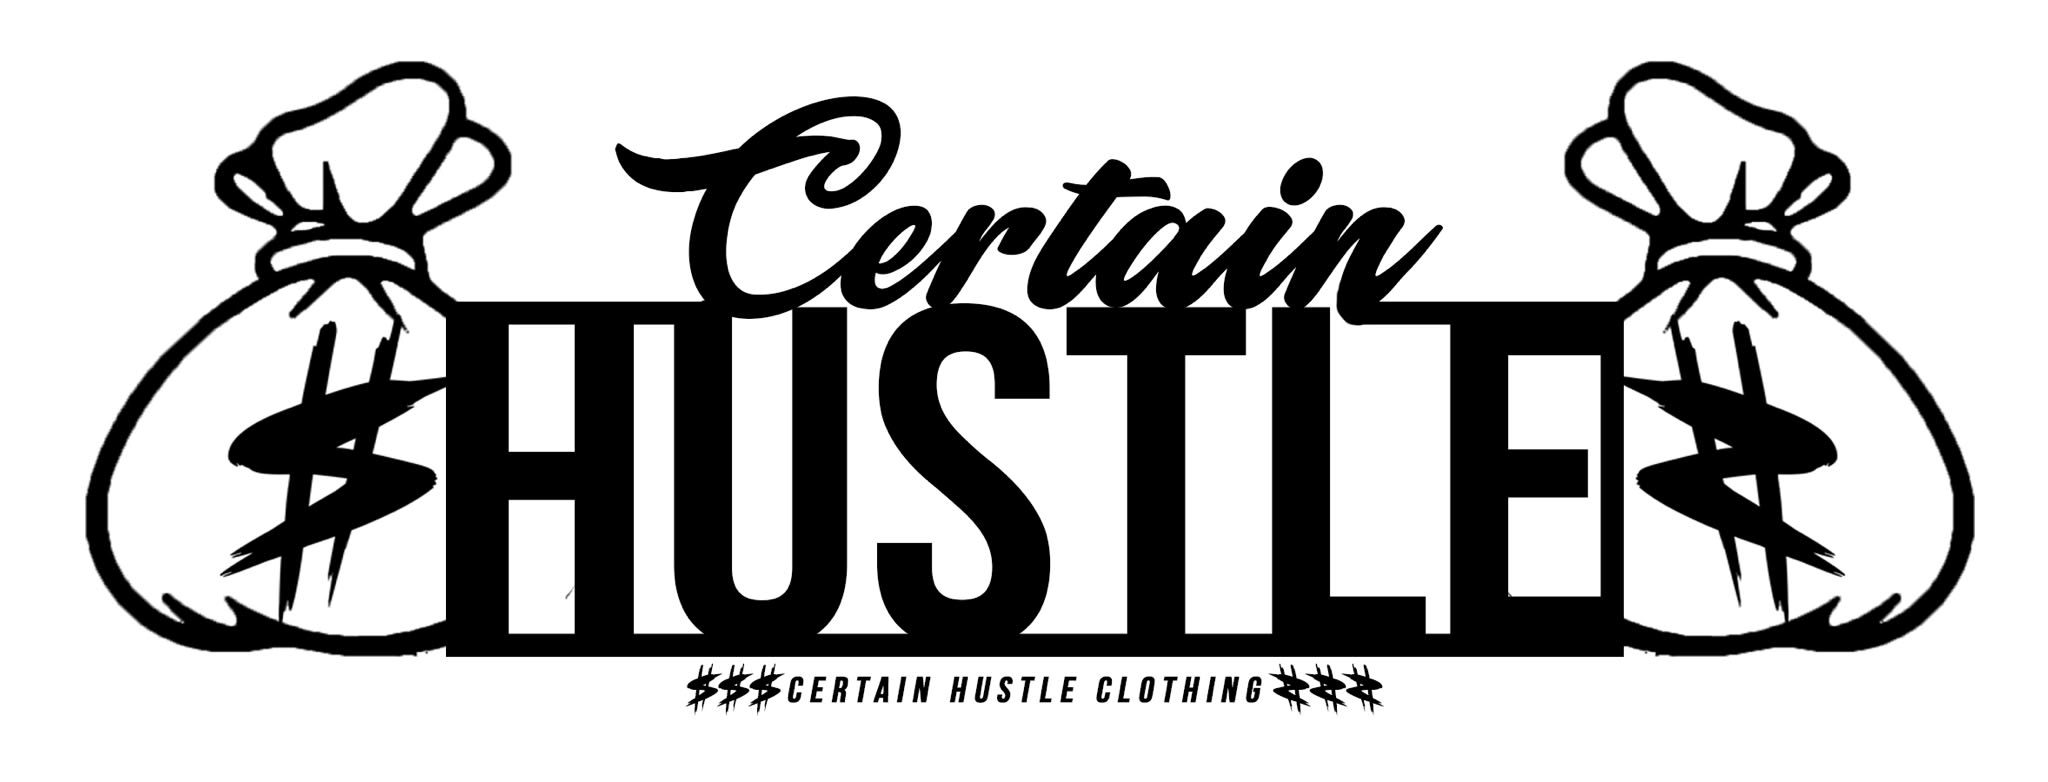 Certain Hustle Clothing